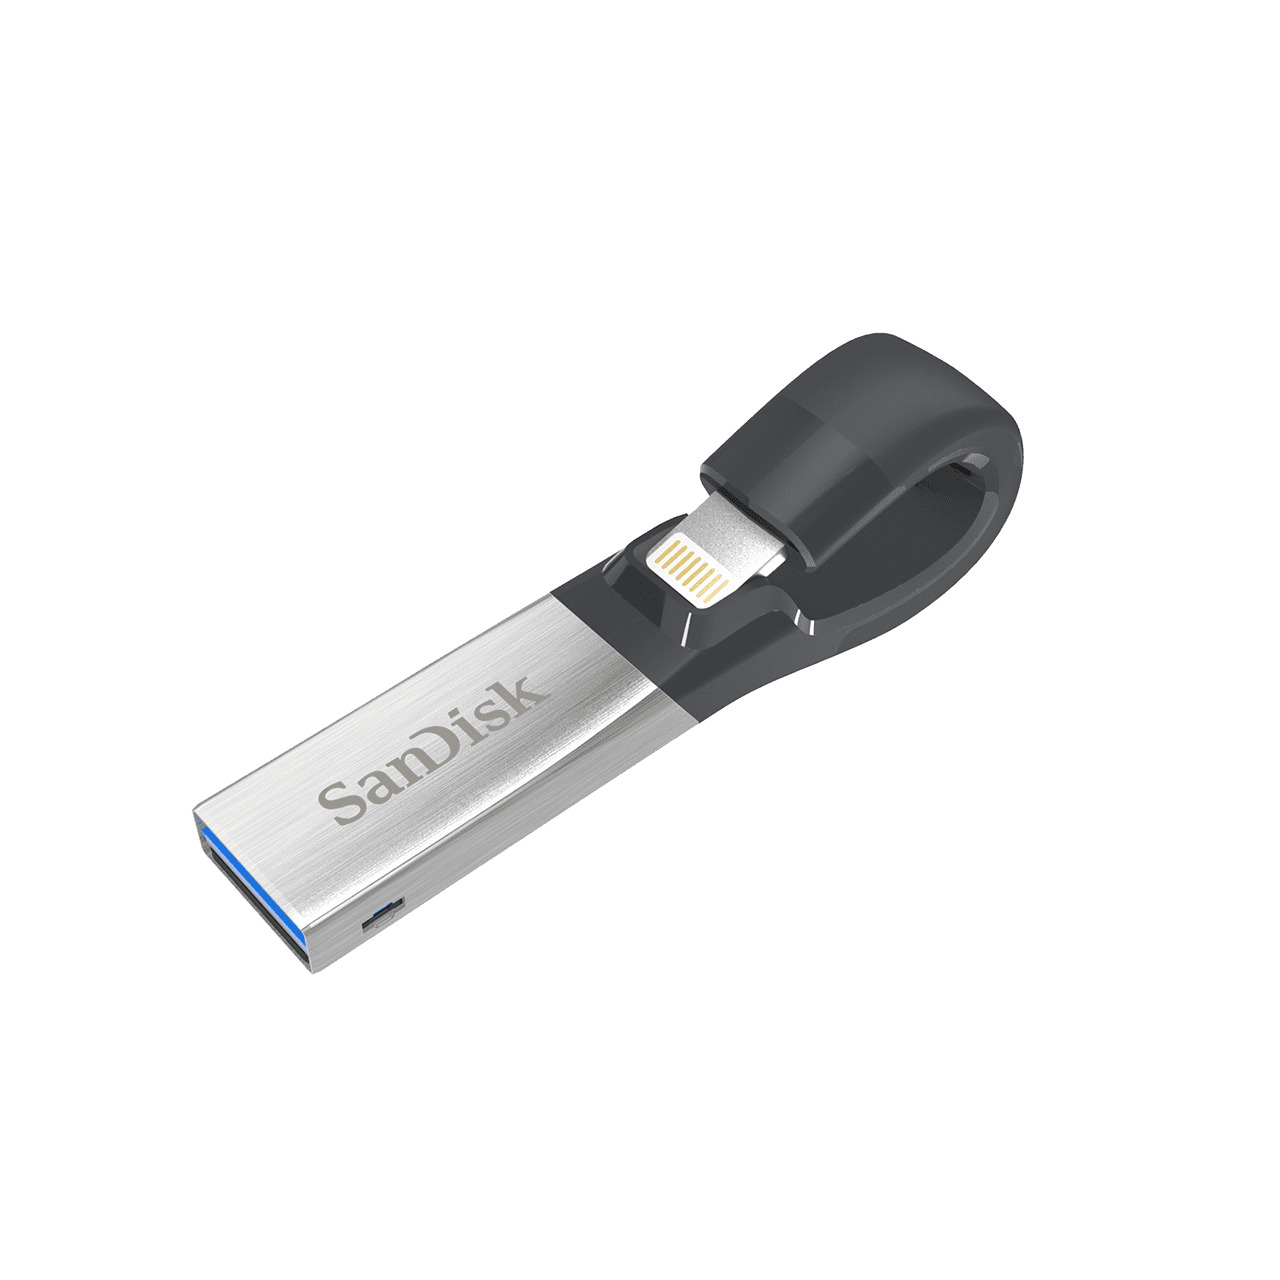 SanDisk iXpand 16GB Lightning USB 3 Flash Drive For Apple iPhone iPad Computer